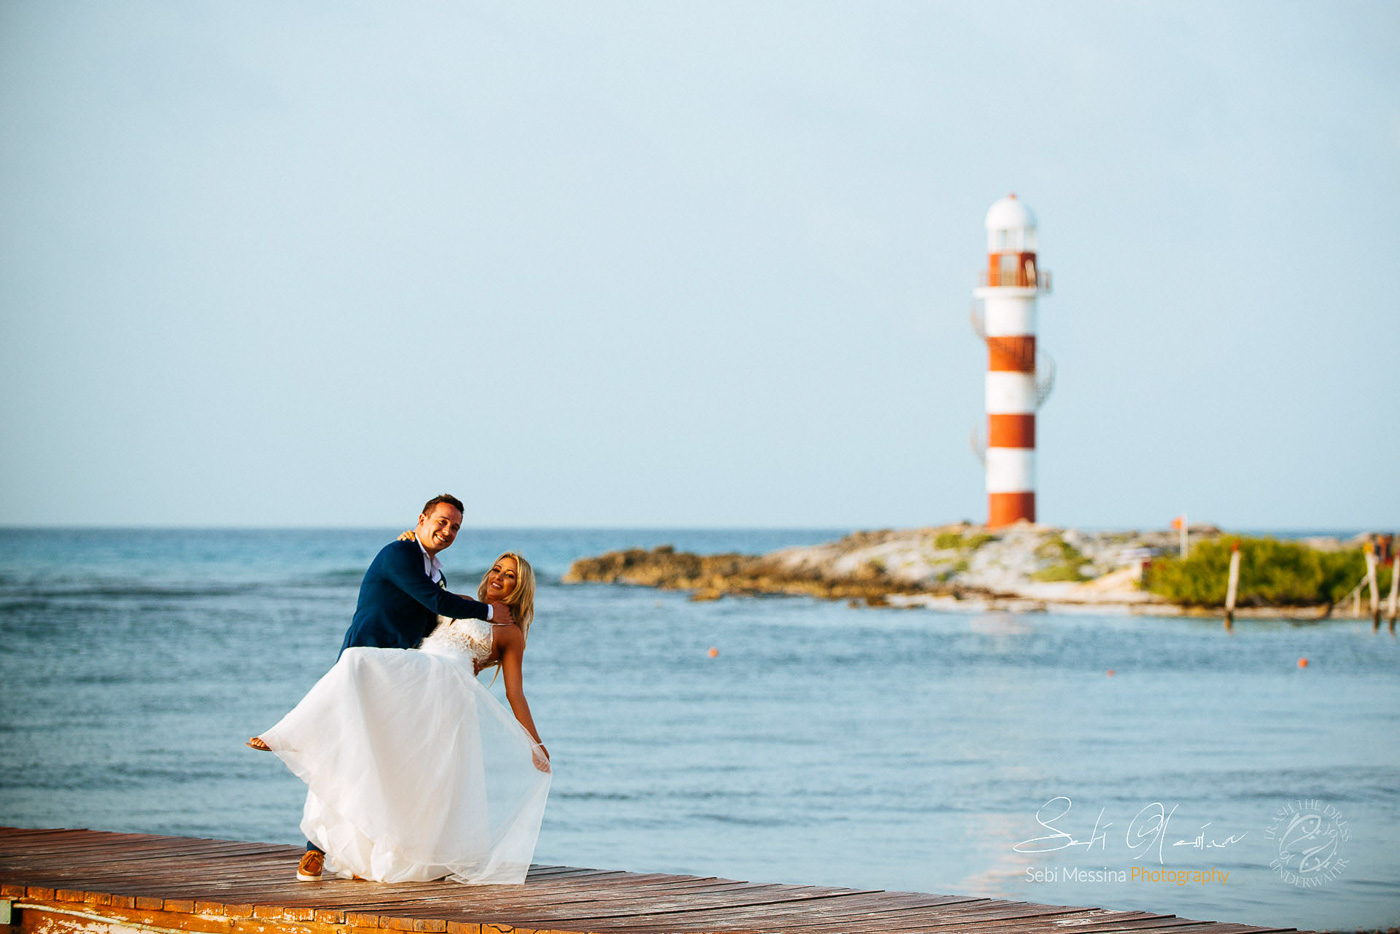 Lighthouse at Hyatt Ziva Cancun - Sebi Messina Photography